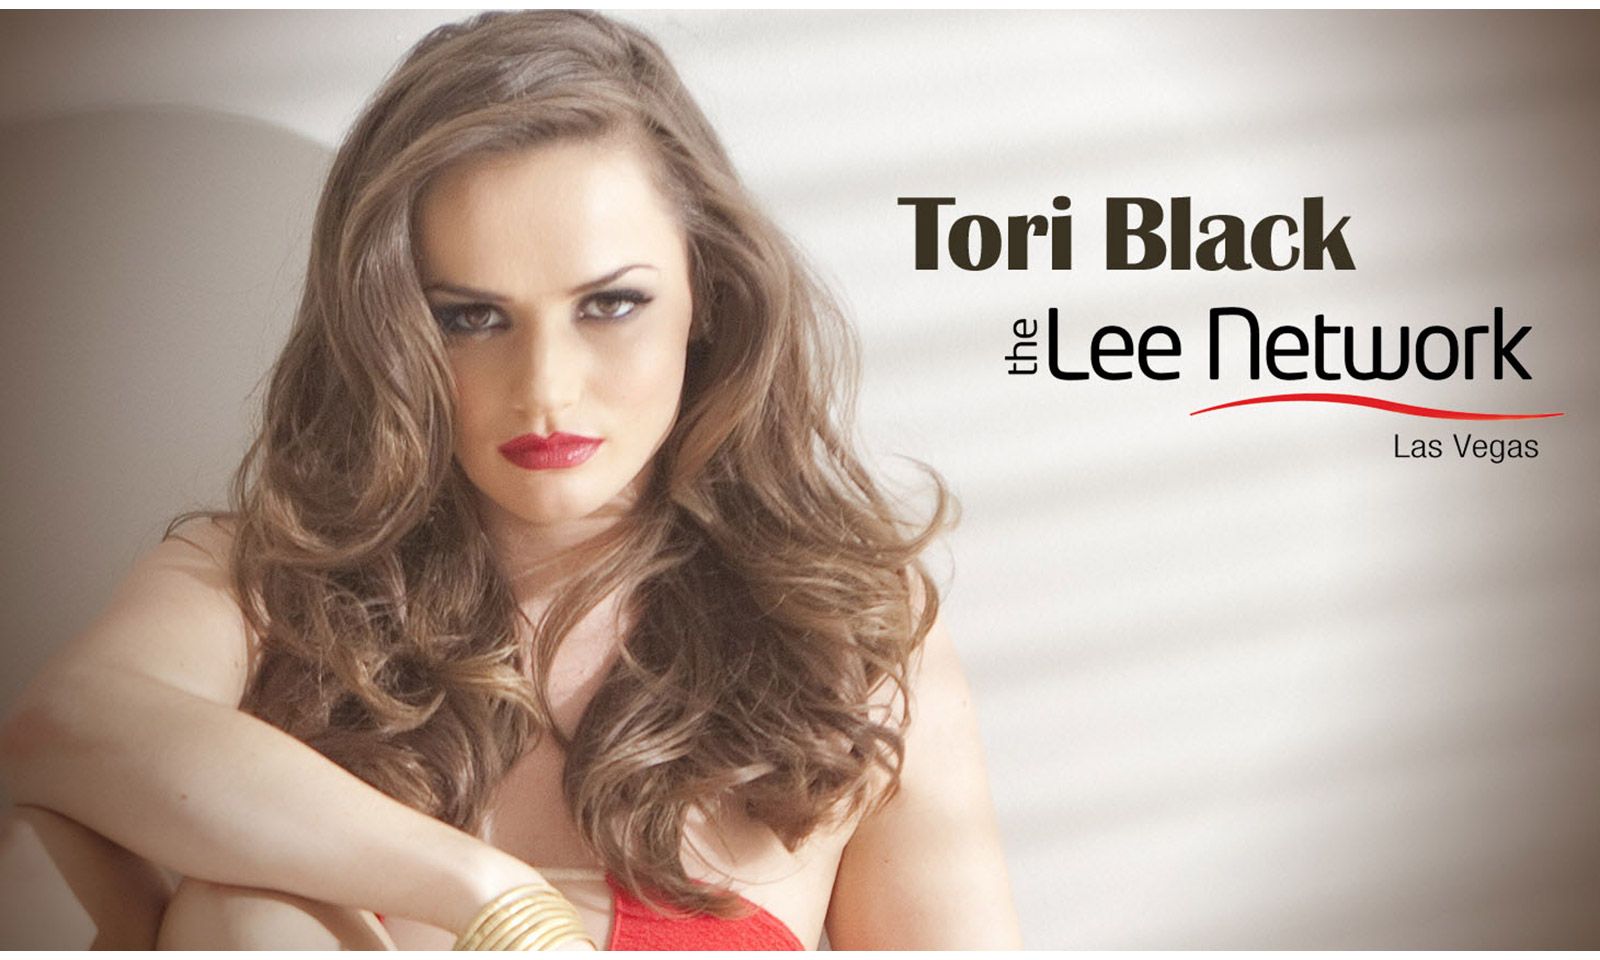 Tori Black To Feature At Sapphire Las Vegas on Friday Night